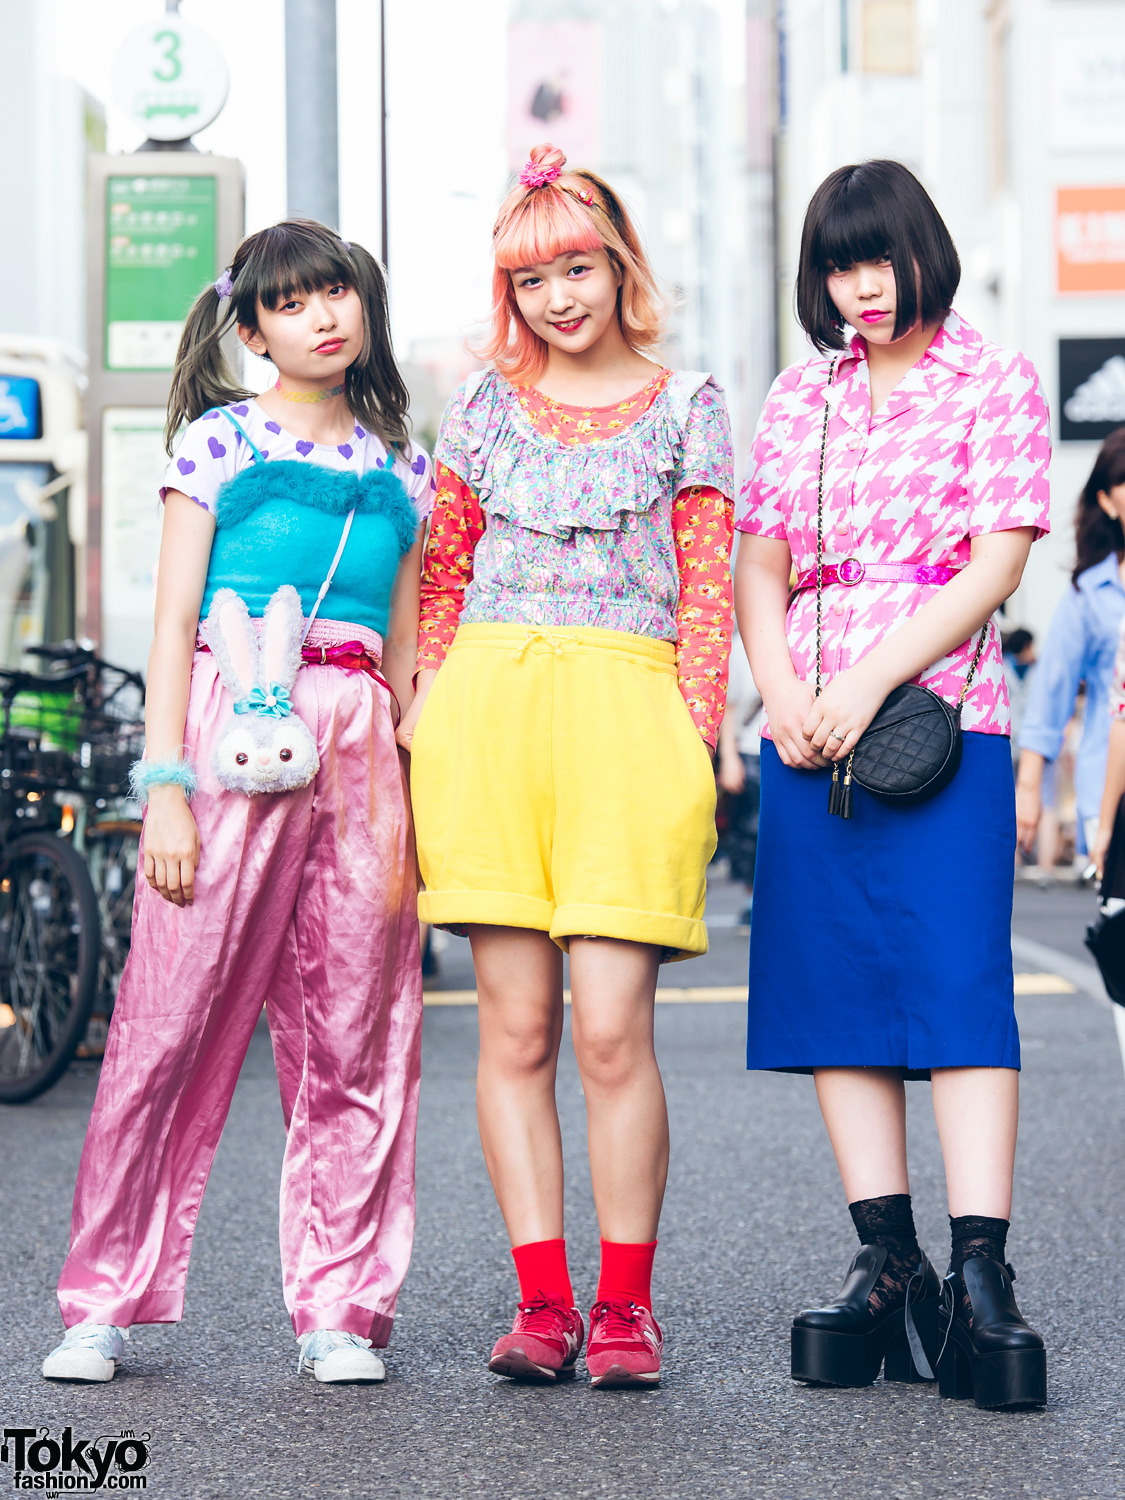 Harajuku Trio in Colorful Mixed Prints Street Styles w/ Kinji, Peco Club, New York Joe, WEGO, Disney, Bubbles, Kenzo, RRR & New Balance